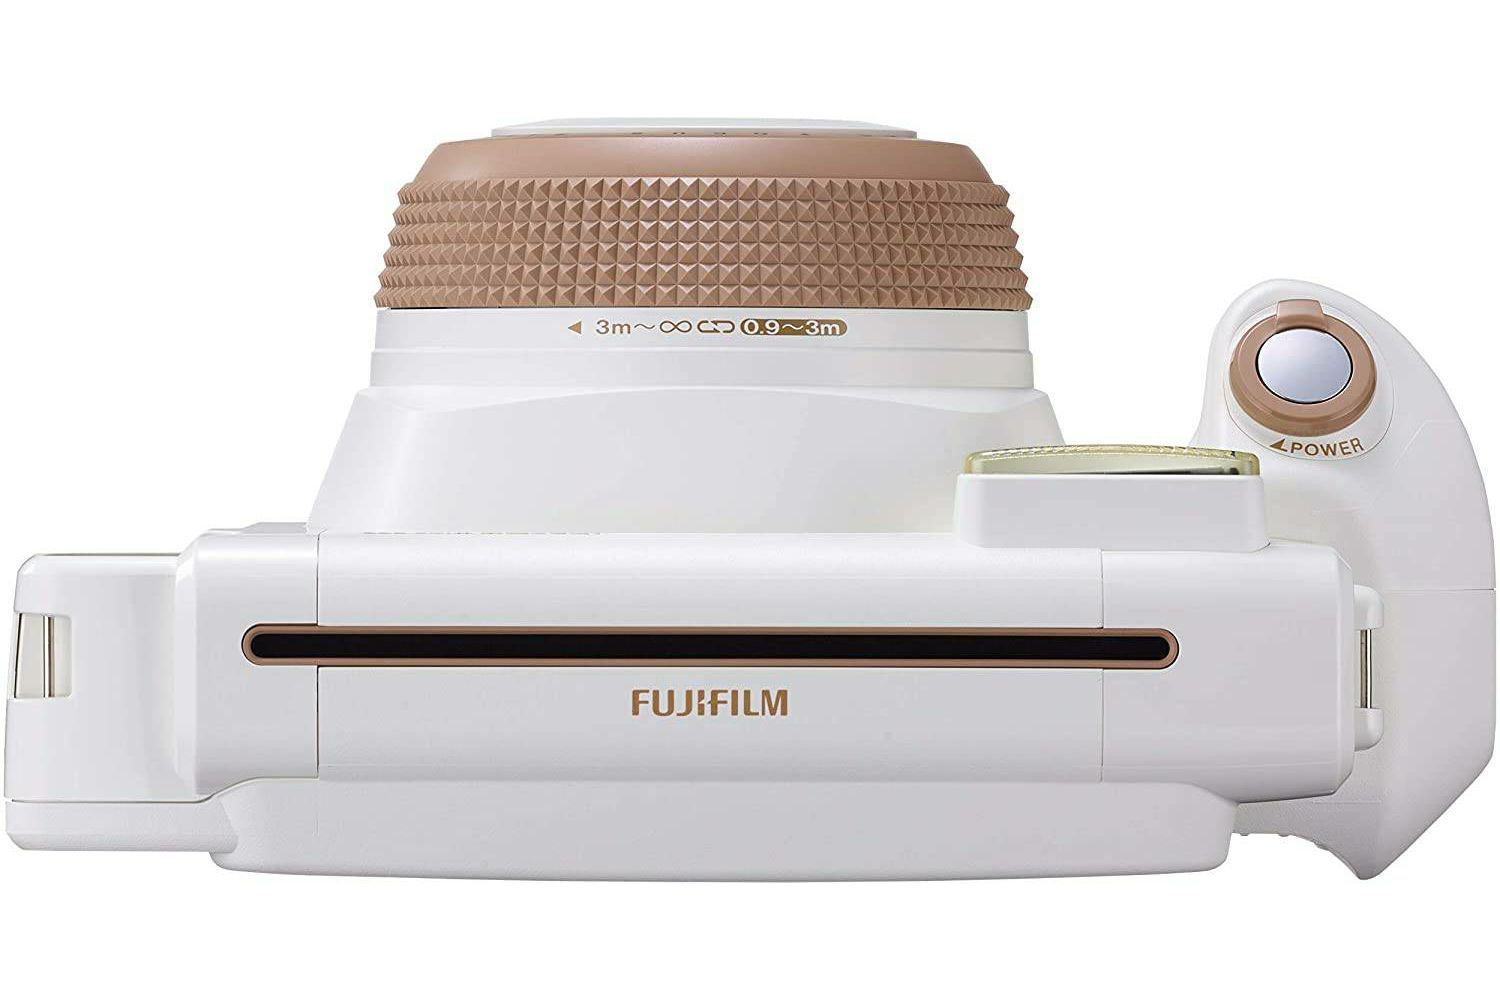 Fujifilm Instax Wide 300 Toffee bijeli polaroid camera Fuji instant fotoaparat s trenutnim ispisom fotografije